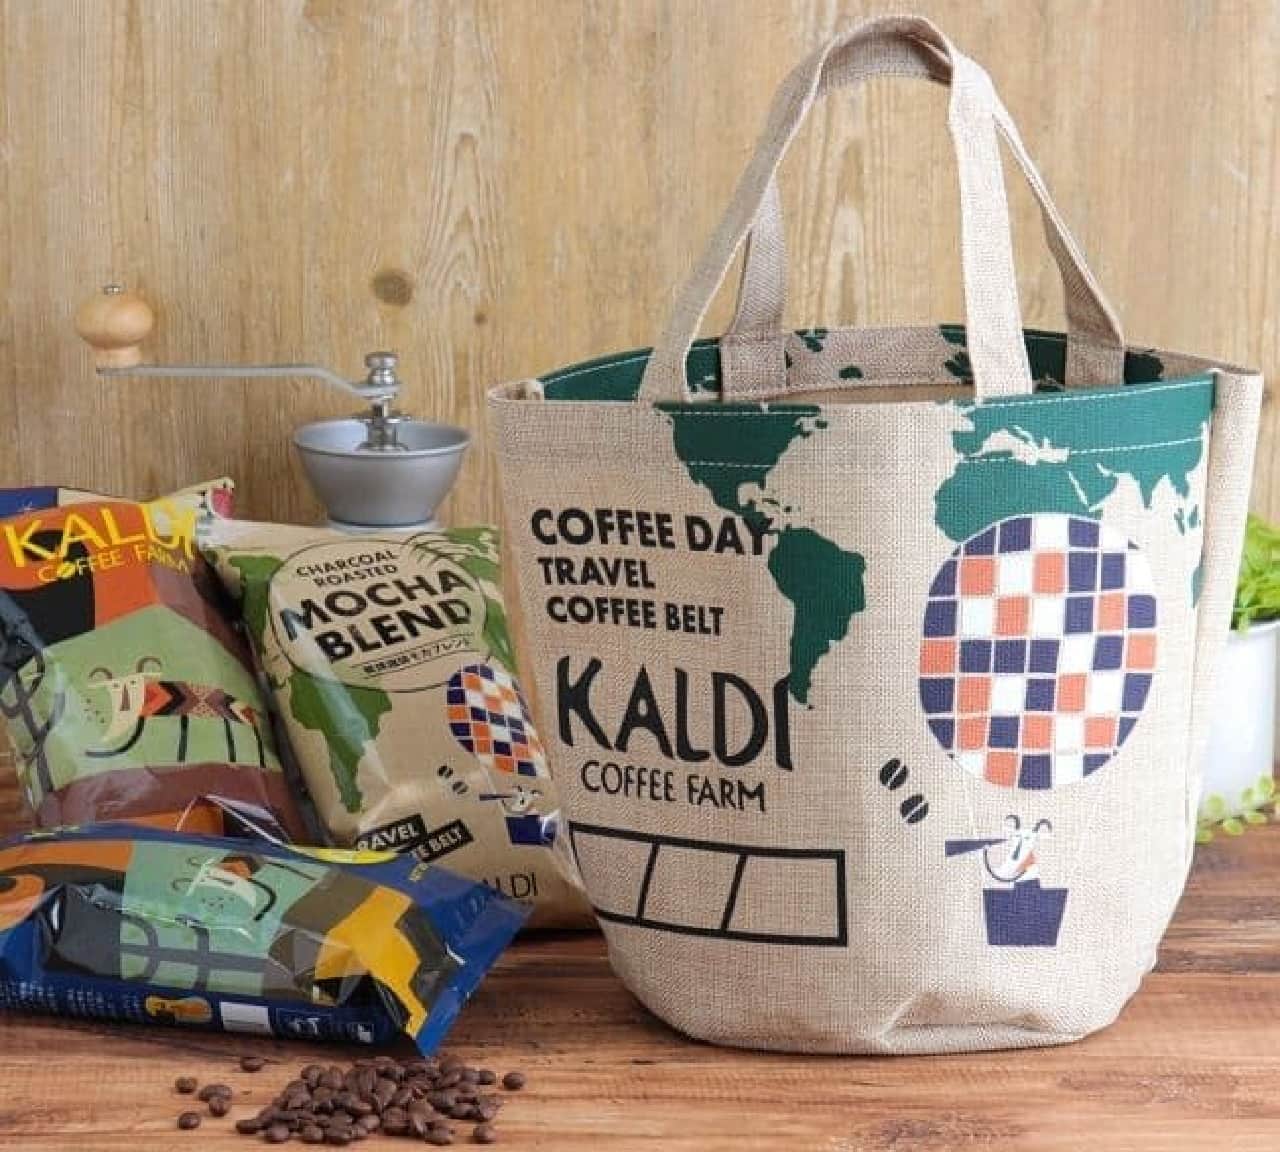 KALDI Coffee Farm "Coffee Day Bag"